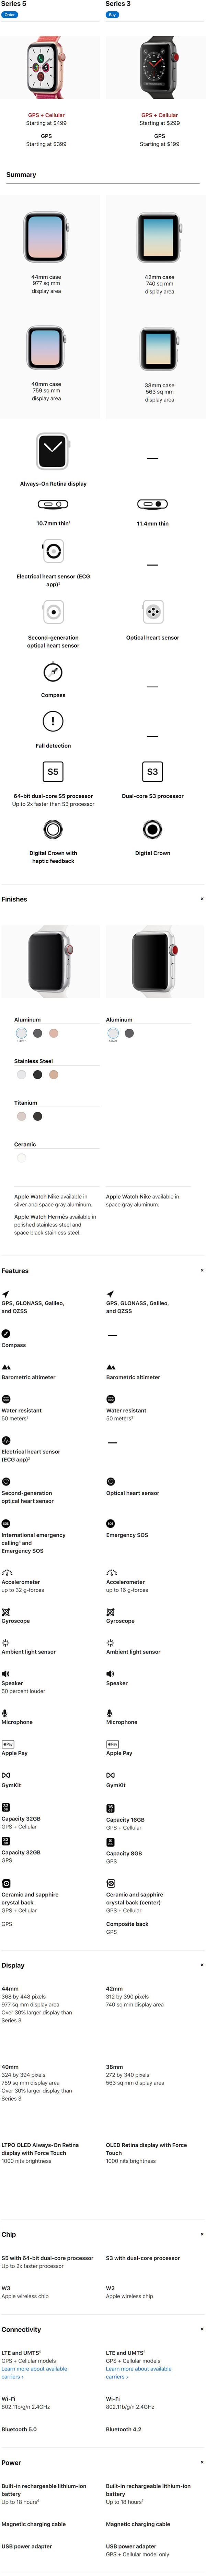 Apple Watch Series 4 vs Series 3 - Full Comparison! 